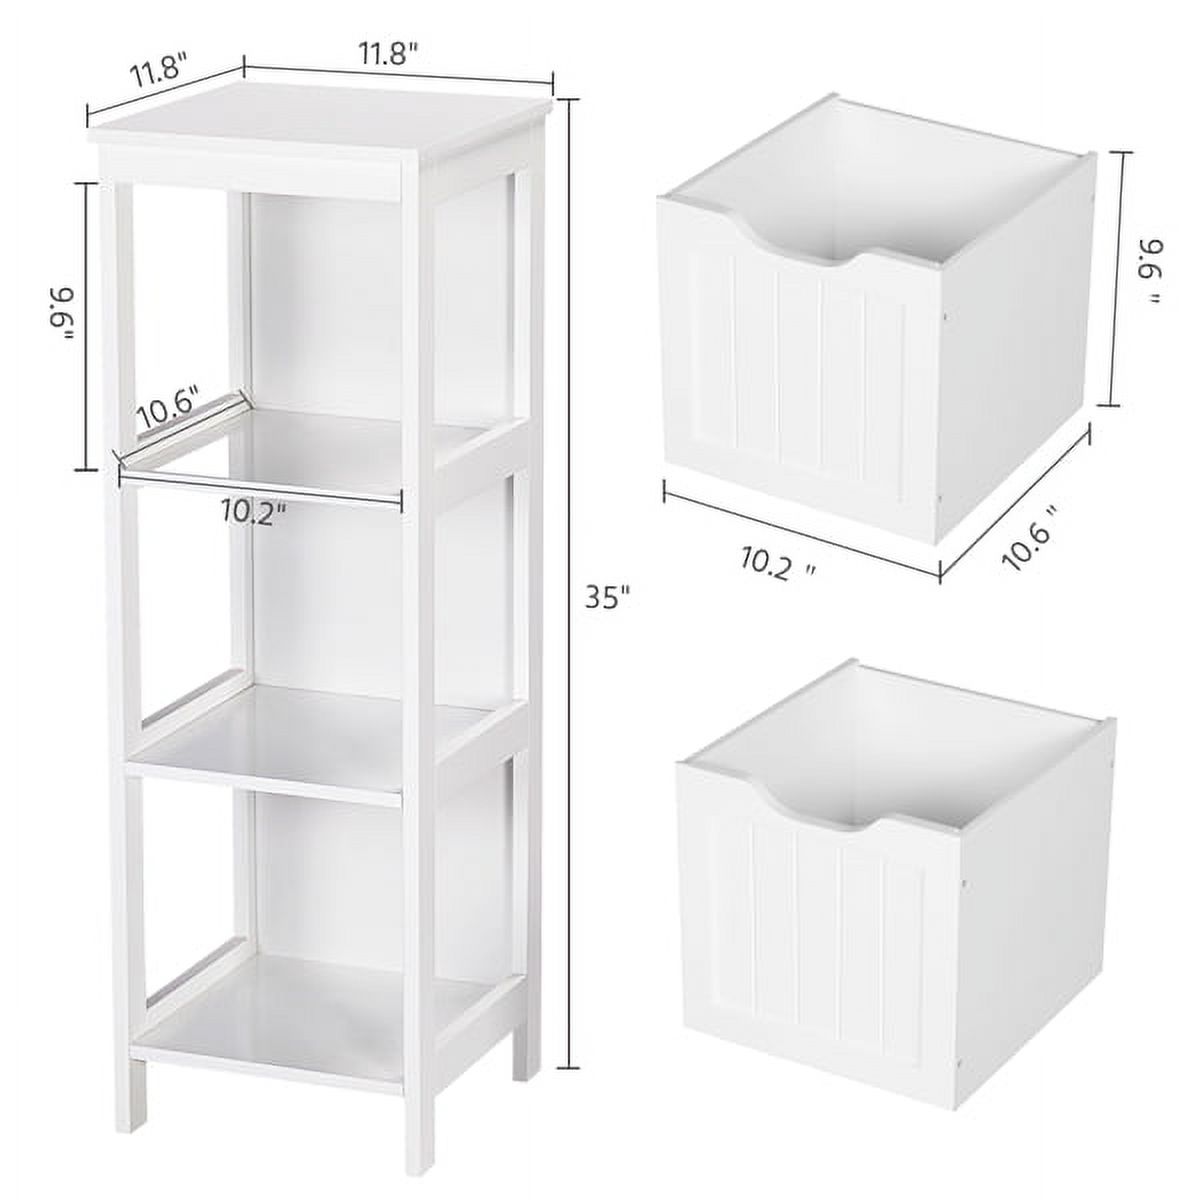 Alden Design Adjustable 3 Tiers Bathroom Cabinet Modern Storage Organizer Heavy Duty Vanity Stylish Floor Cabinet, White - image 2 of 11